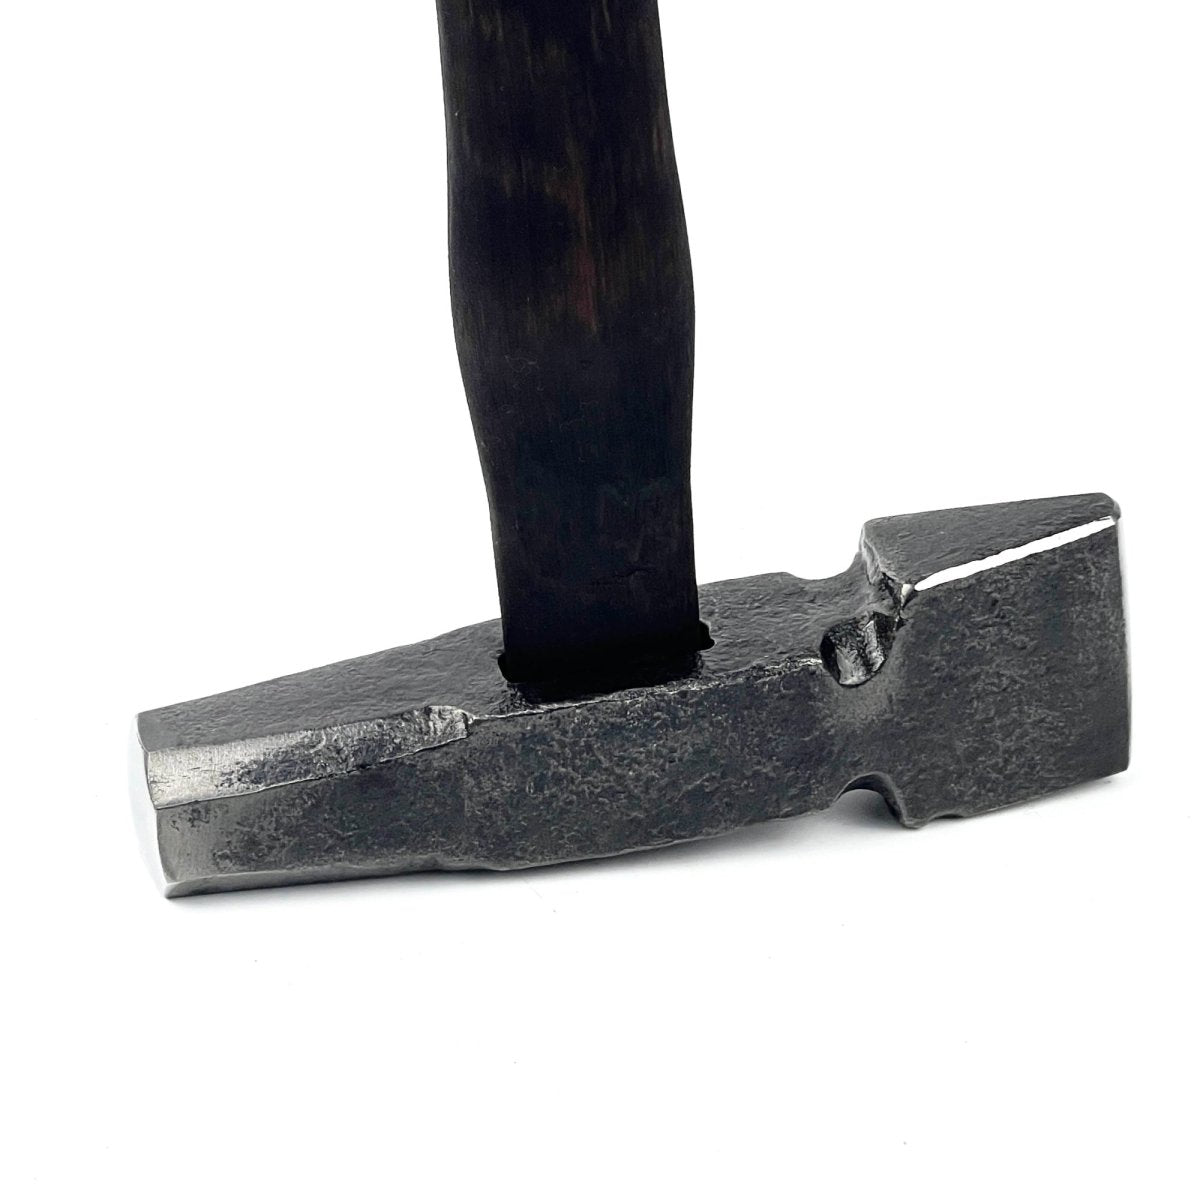 Blacksmiths top fuller hammer 2.4lbs - Premium blacksmithing tools from AncientSmithy